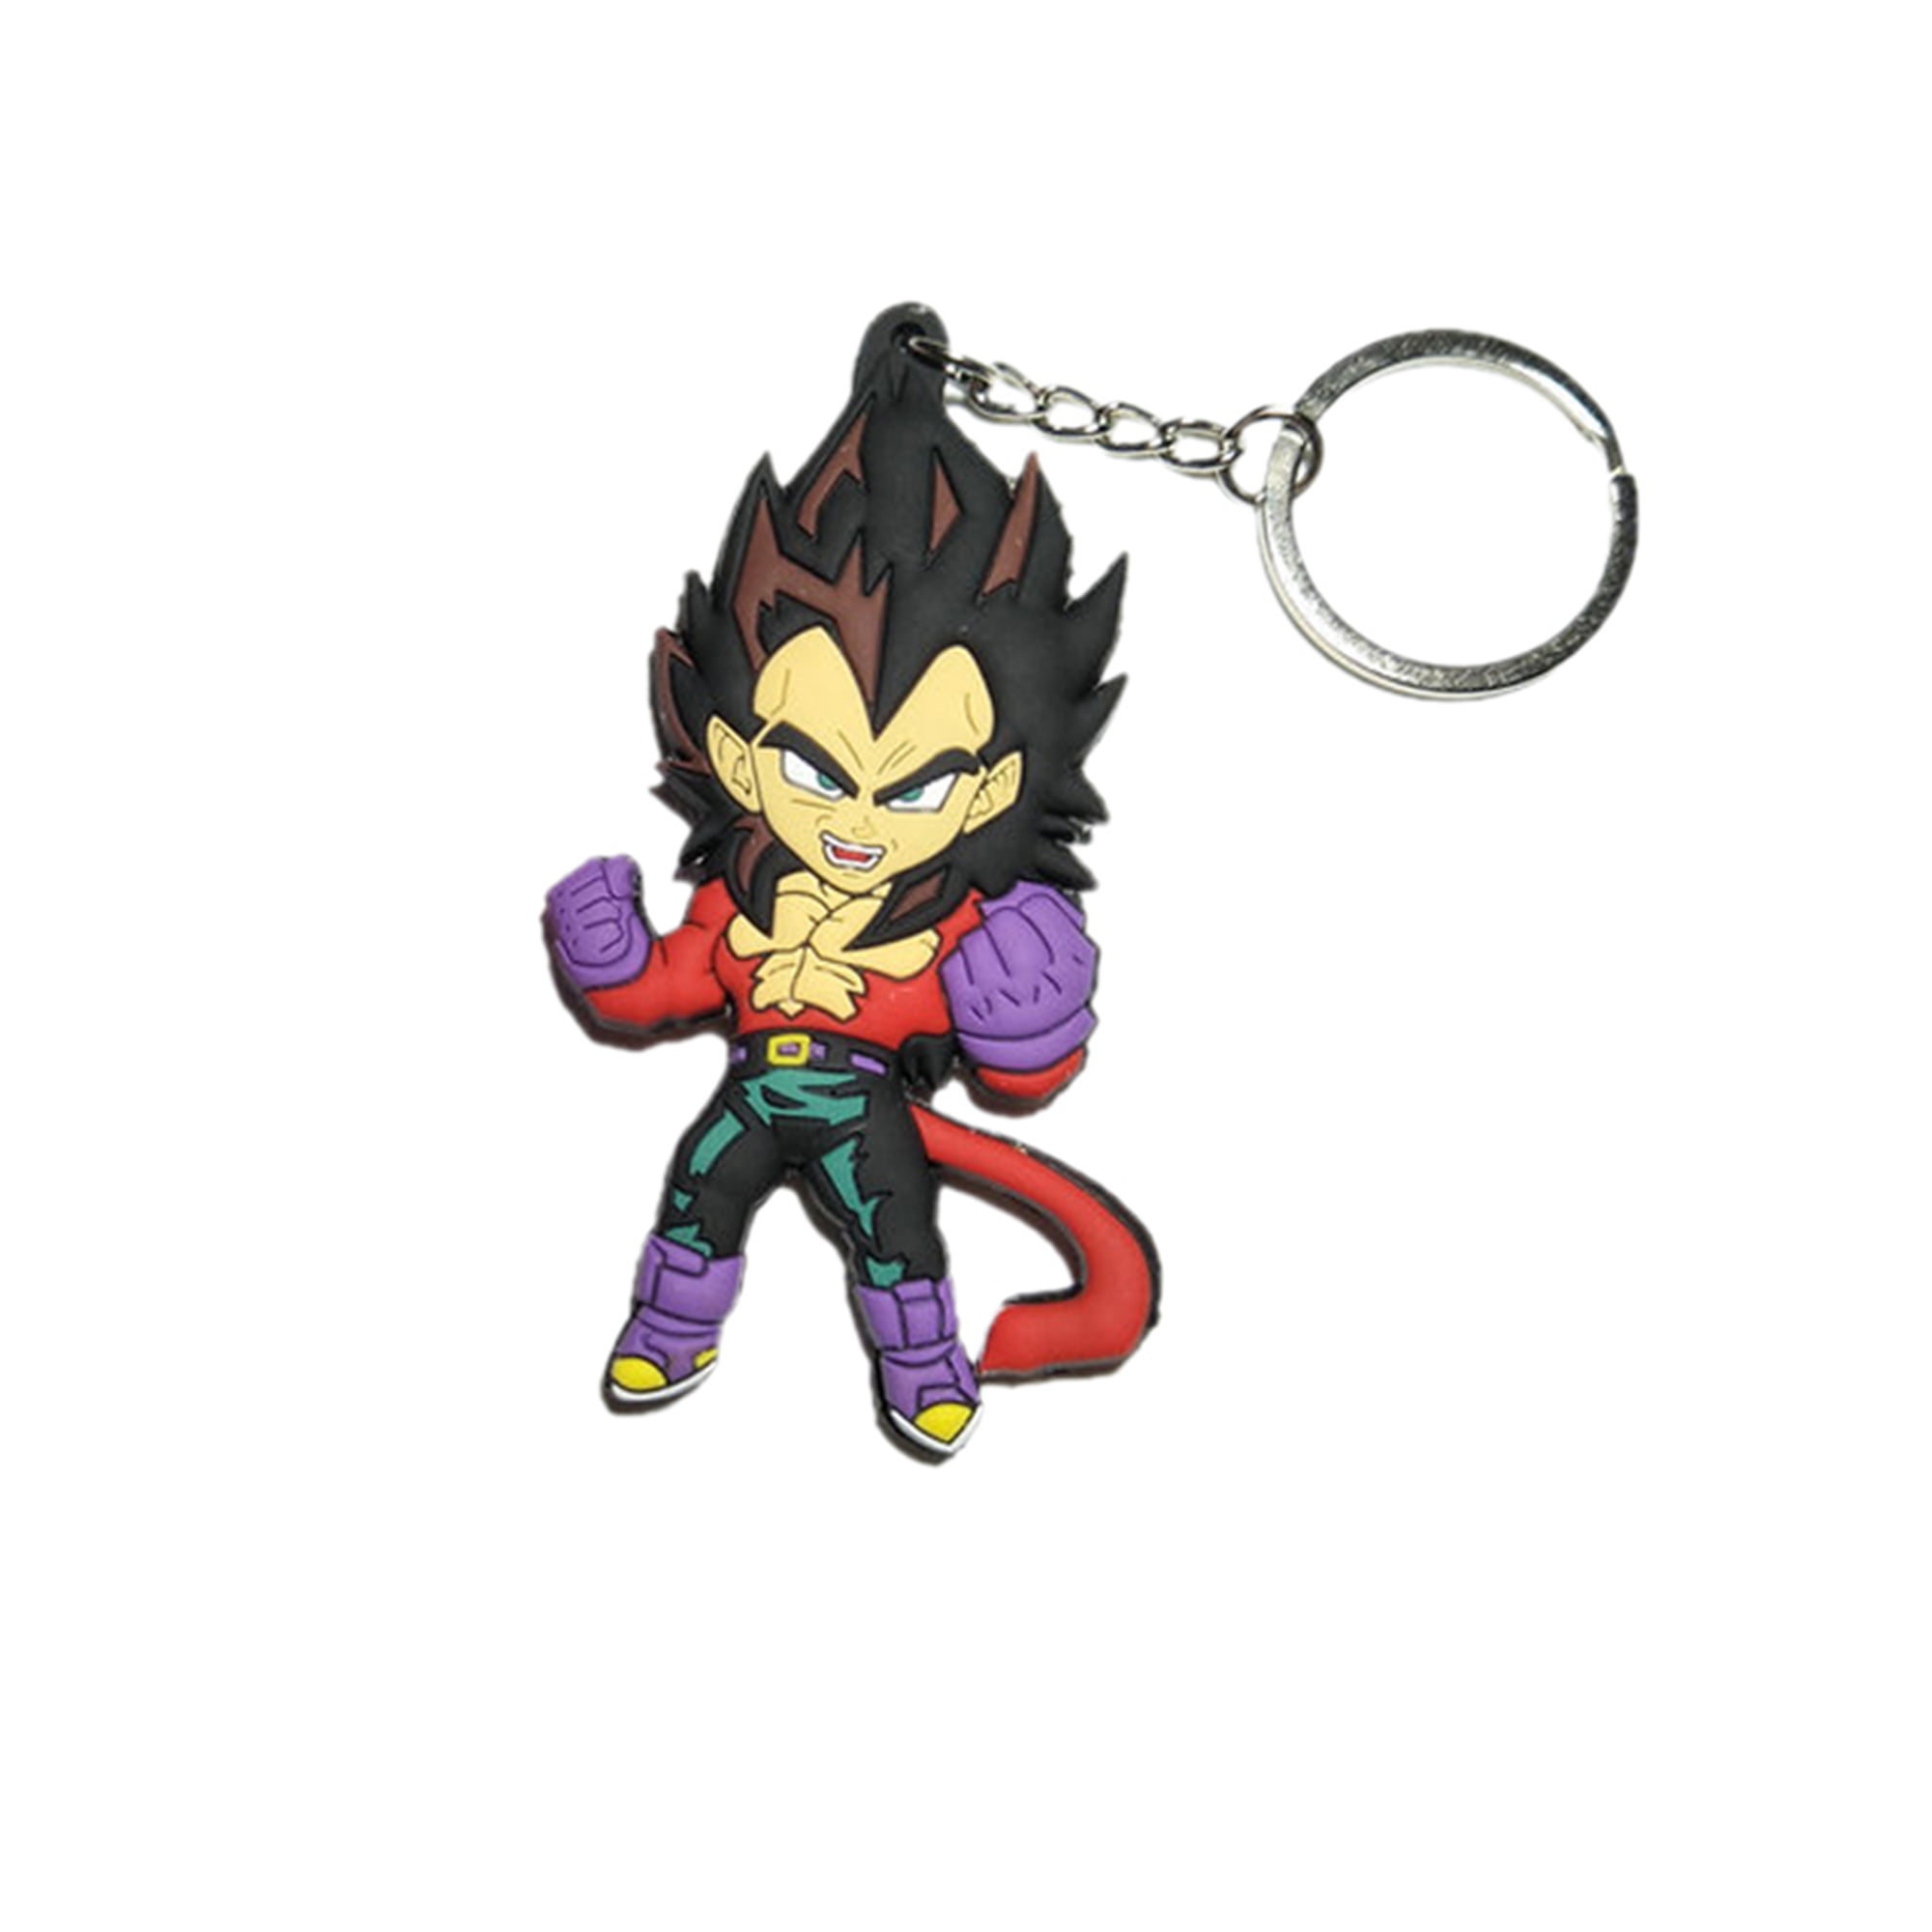 Hot Anime Dragon Ball Z Super Saiyan 1 Acrylic Key Ring Pendant Keychain Gift 